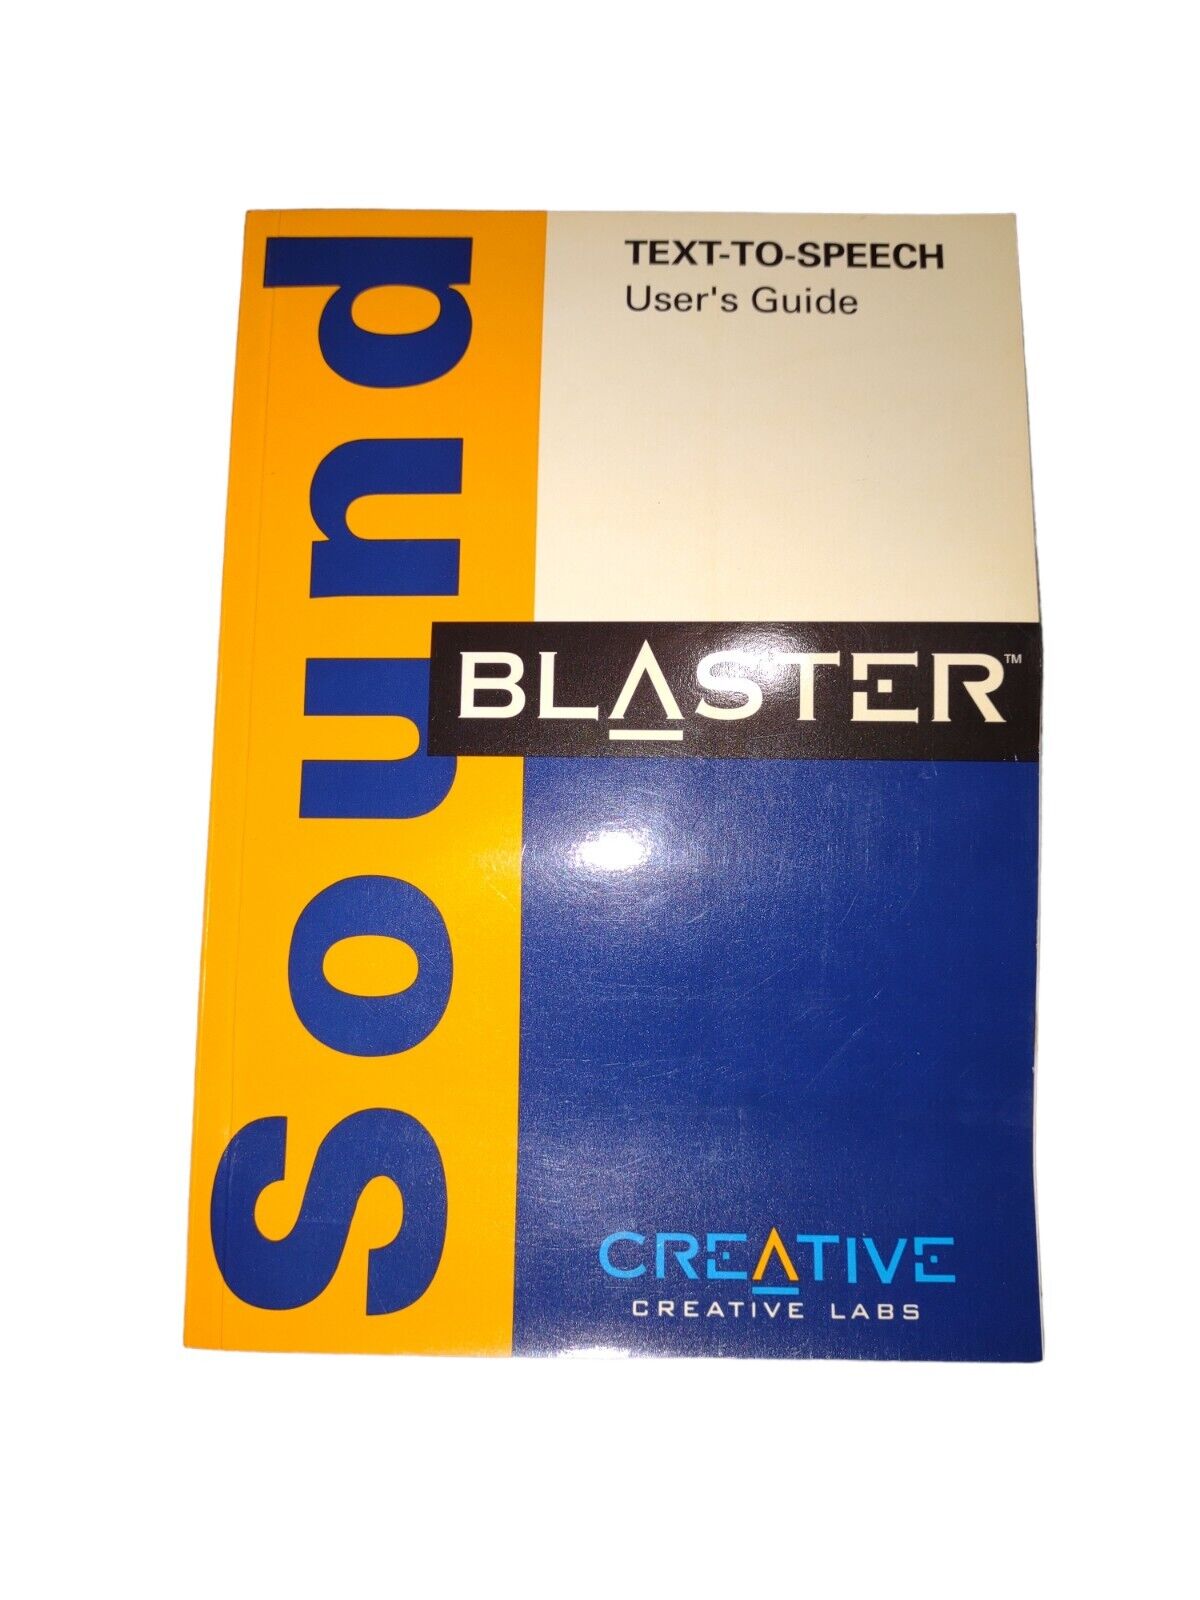 Creative Labs SOUND BLASTER AWE64 1.0 User's Guide 1997 Vintage 15D